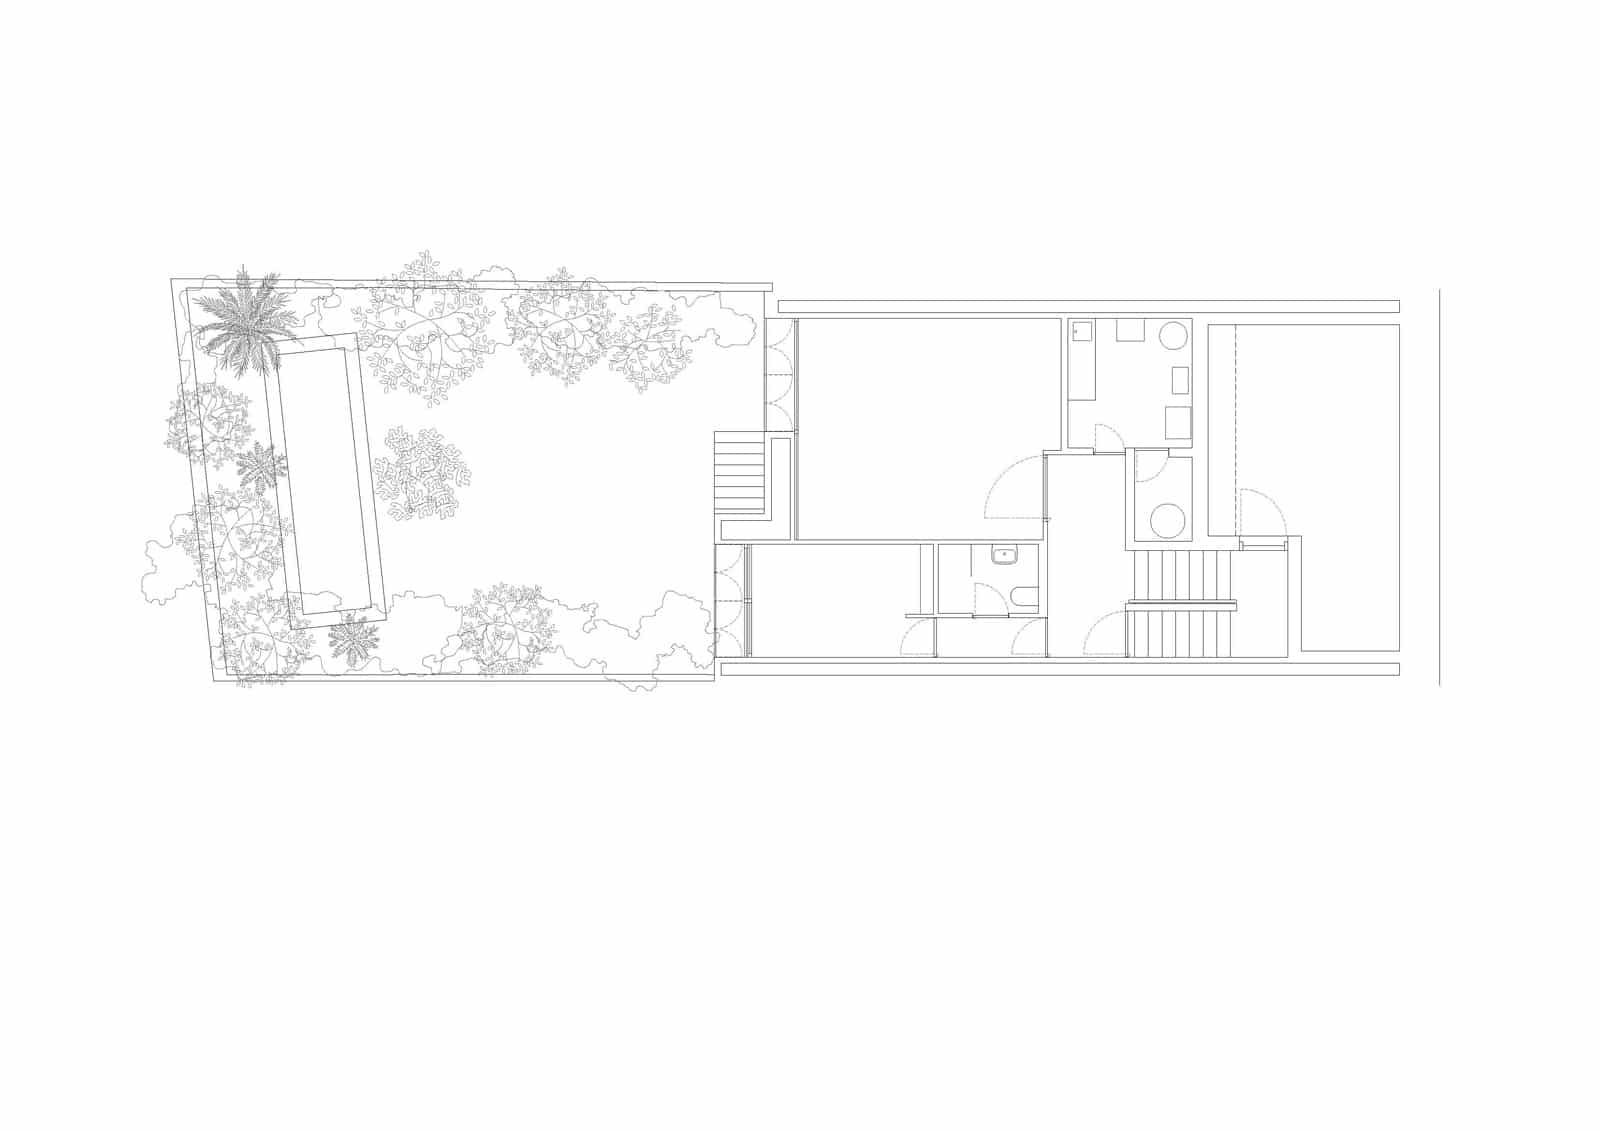 Image of 20220211 ArquitecturaG VerdiHouse 9.1 1 in Verdi House - Cosentino